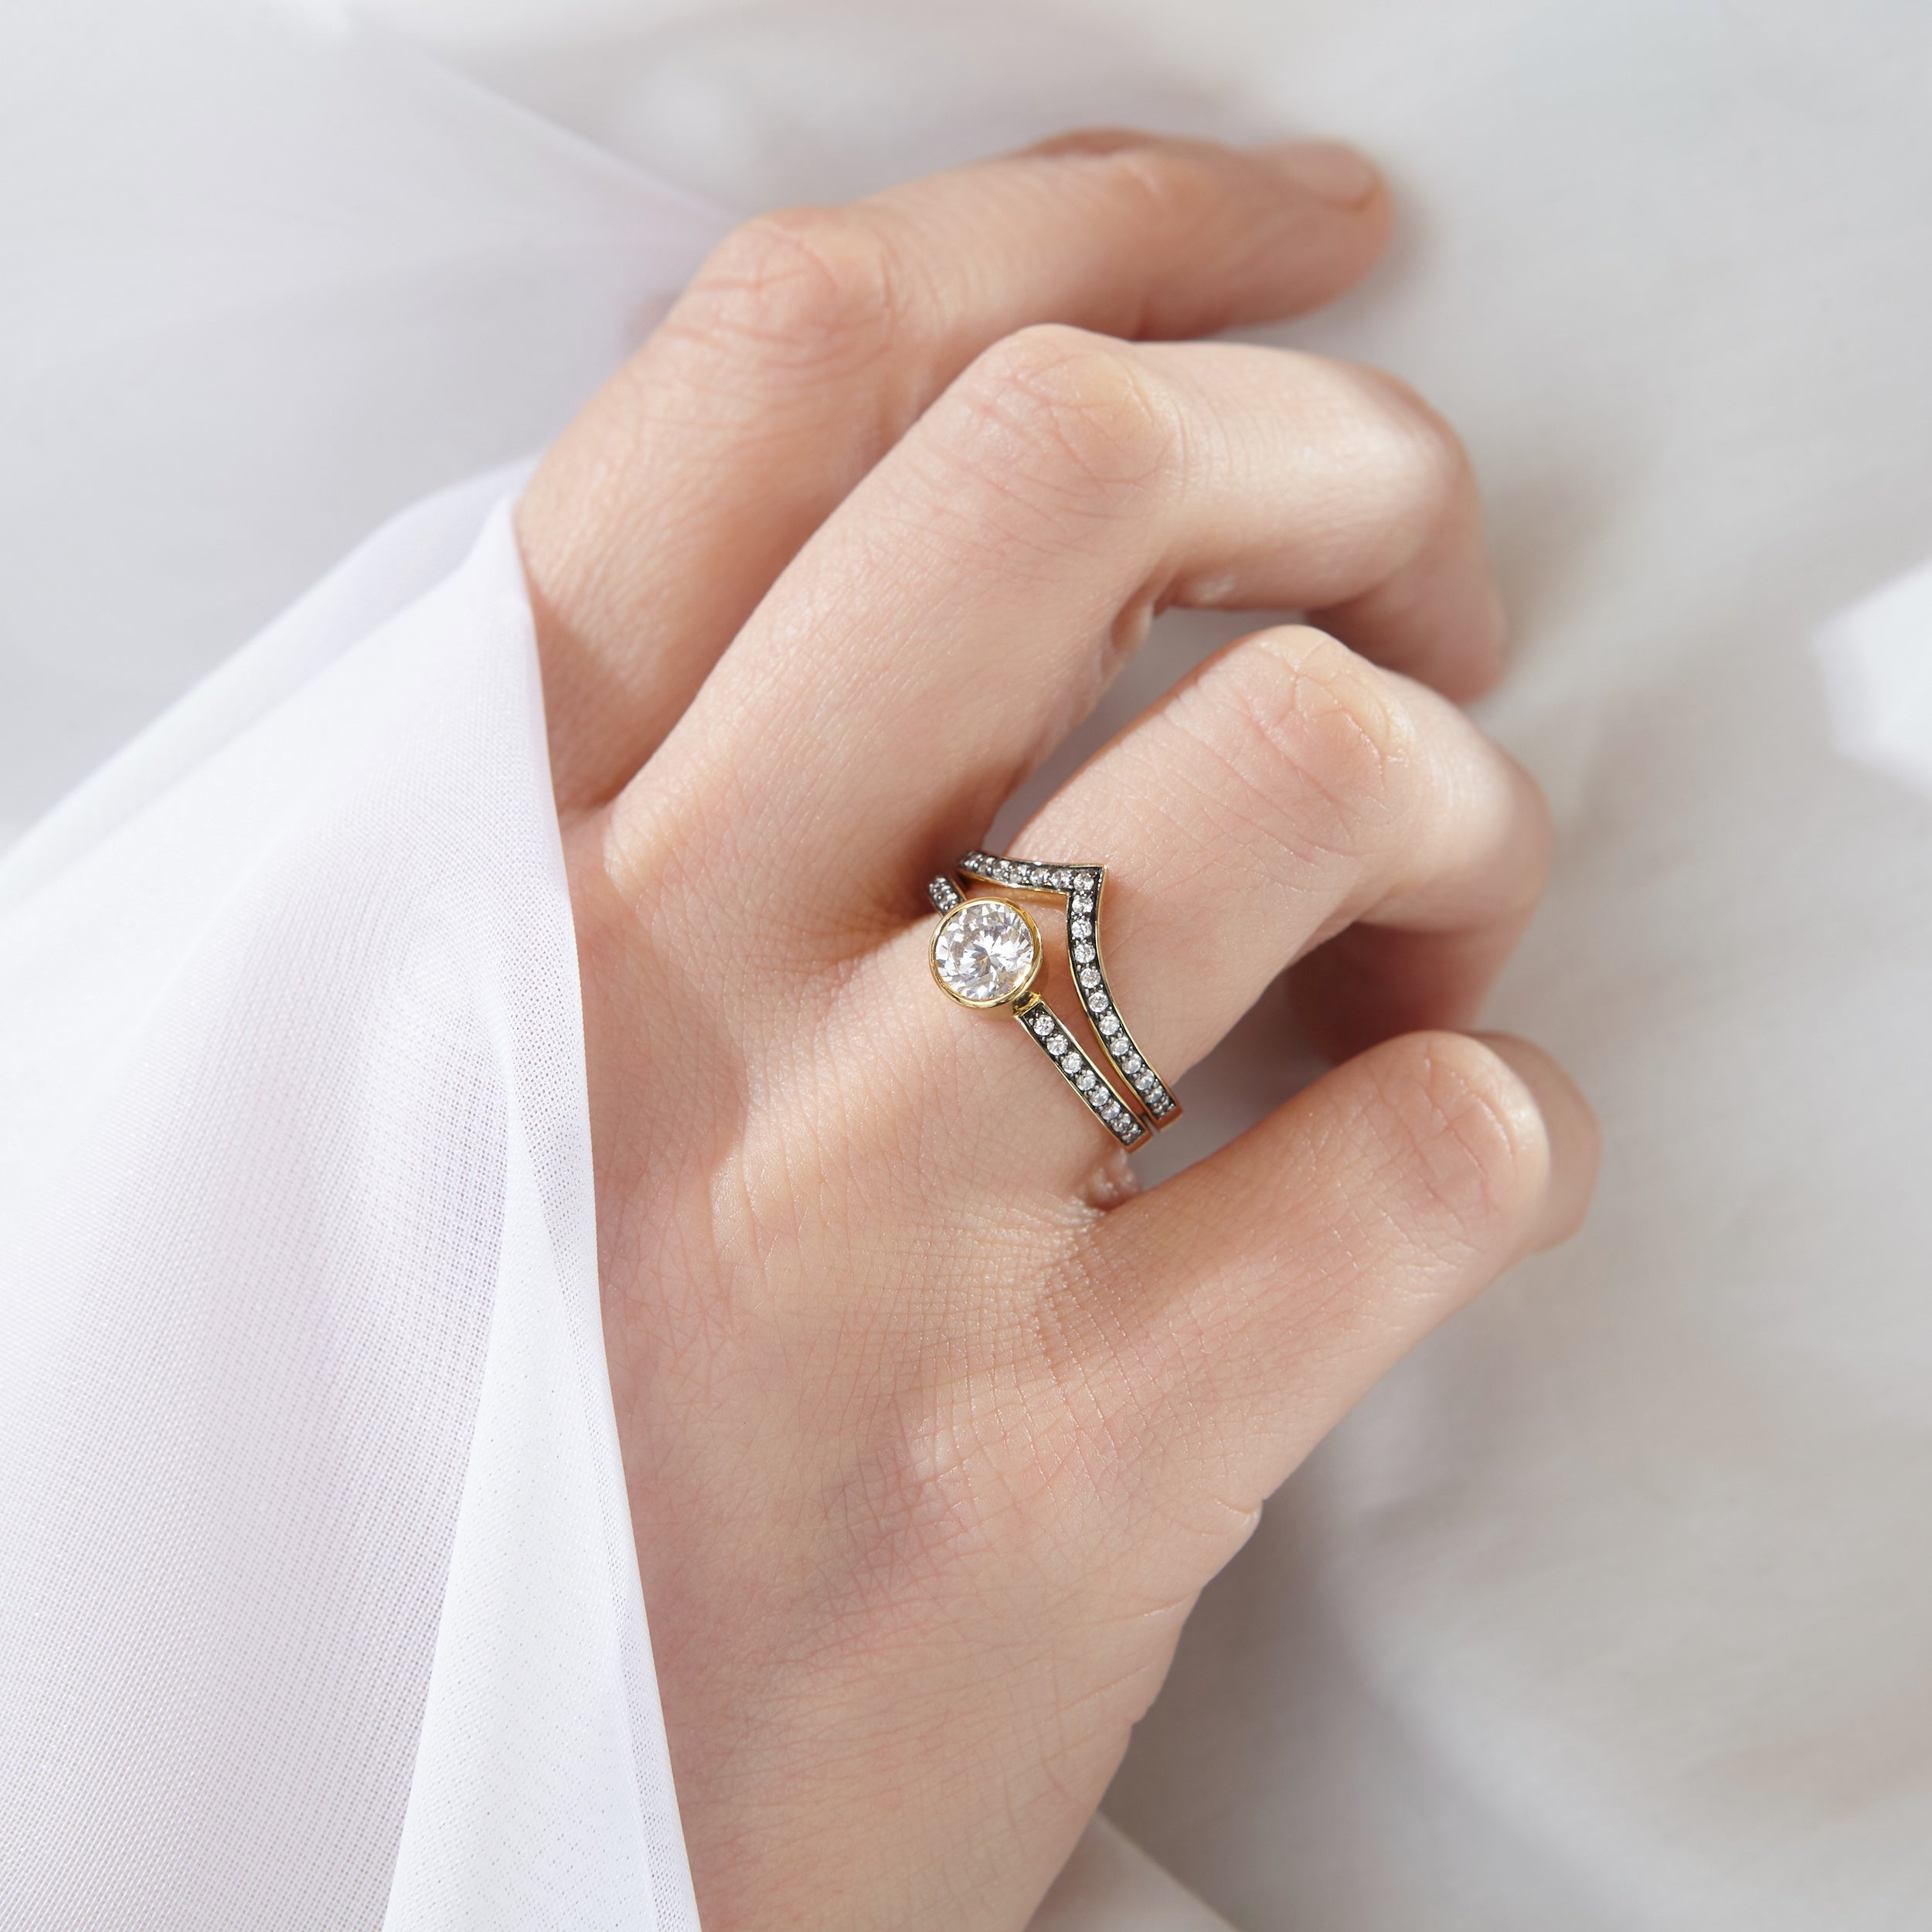 Cleopatra Chevron Diamond Ring Set. 18k White Gold or Platinum. - MONARC CONCIERGE